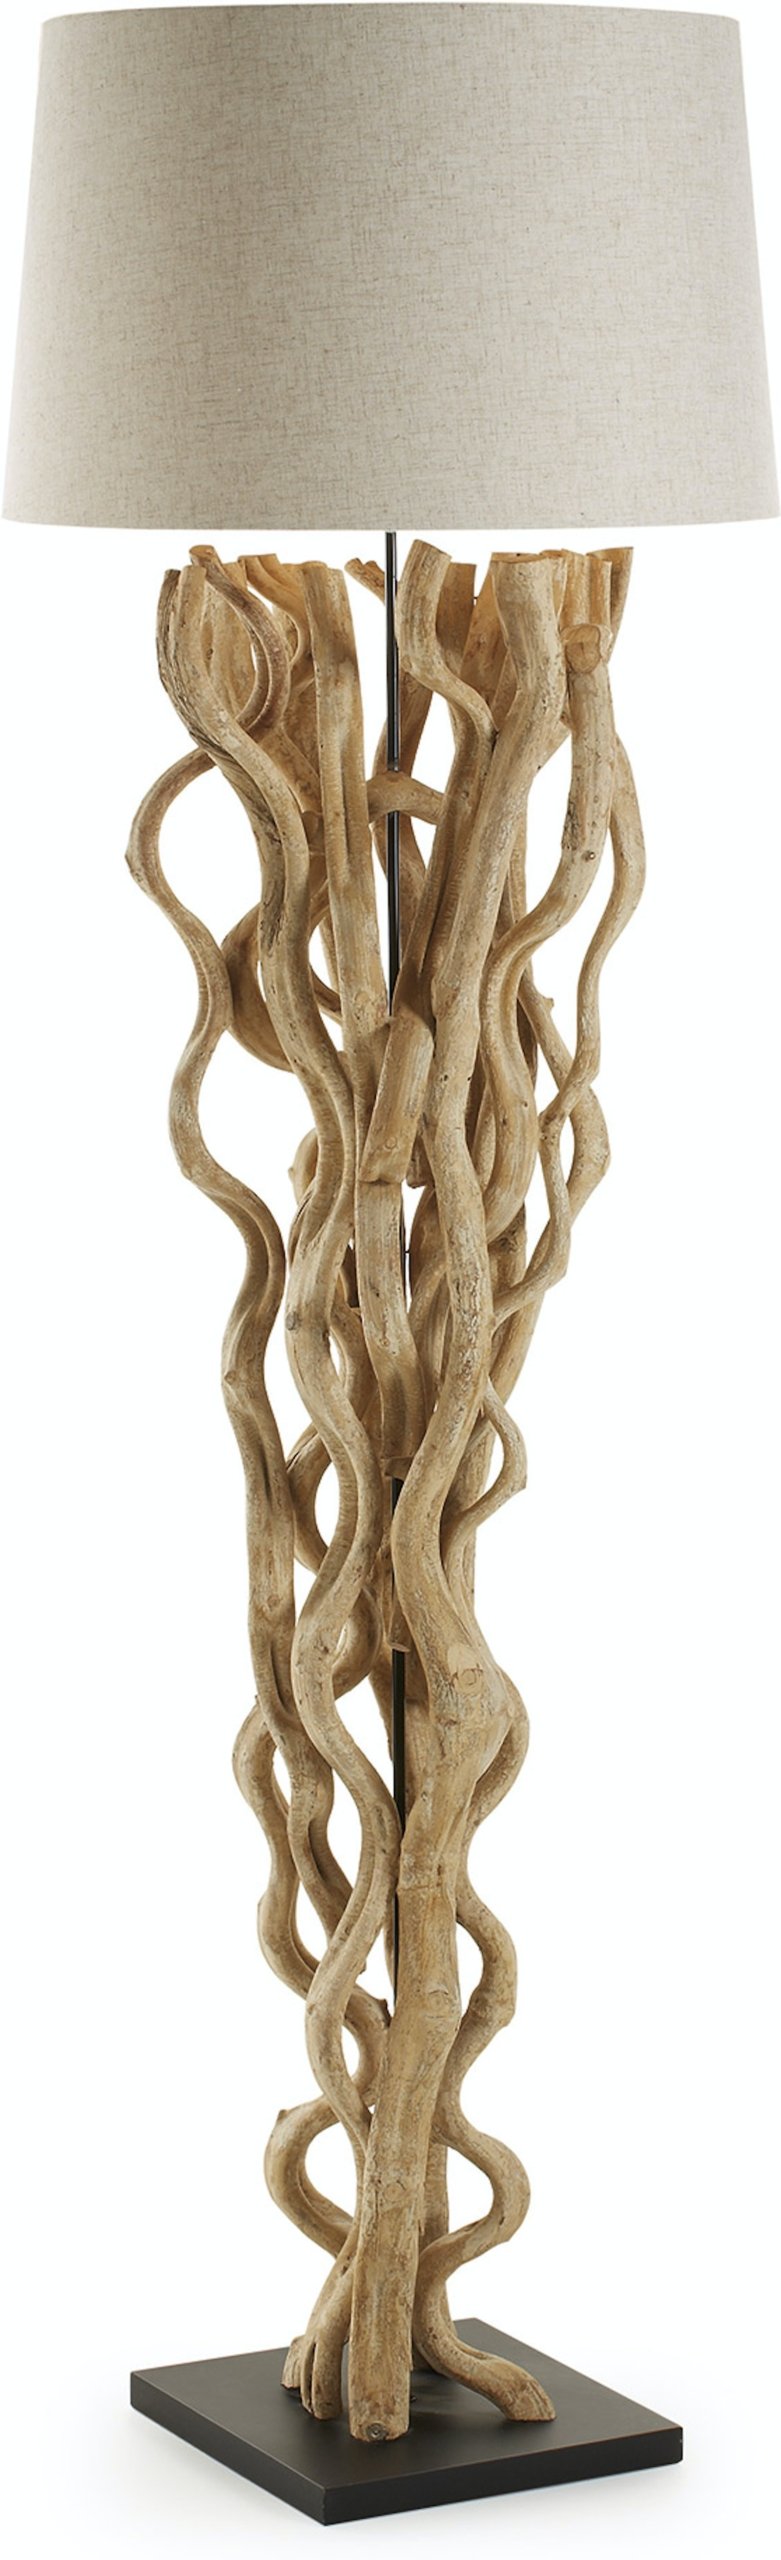 Nuba, Gulvlampe, rustik, solidt træ by Laforma (H: 177 cm. x B: 55 cm. x L: 55 cm., Natur/beige)